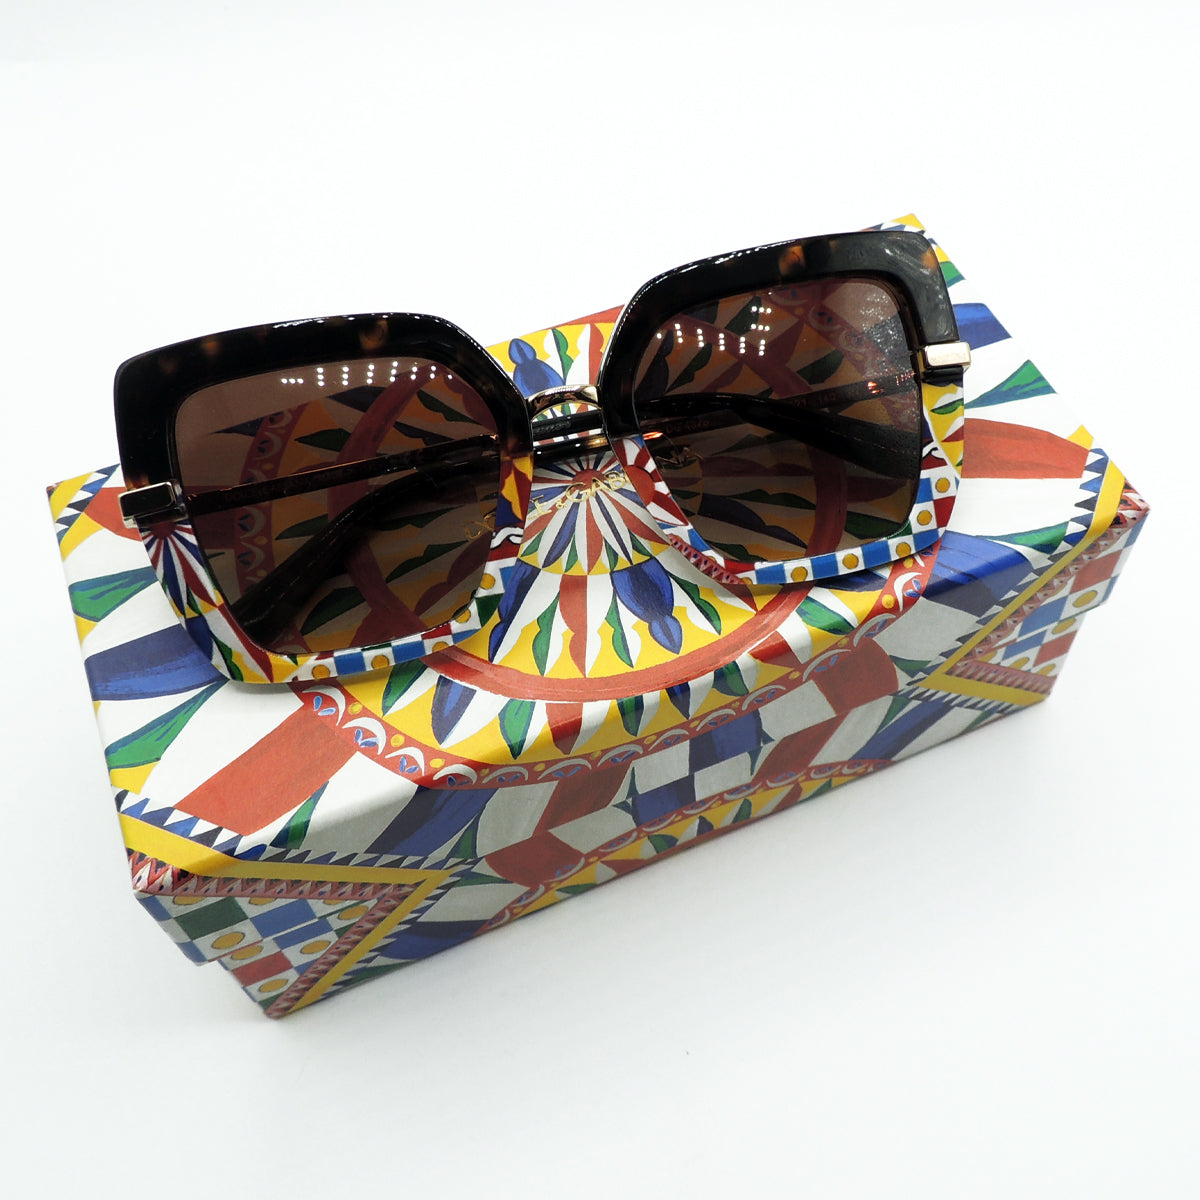 Dolce & Gabbana Women's Sunglasses DG4373